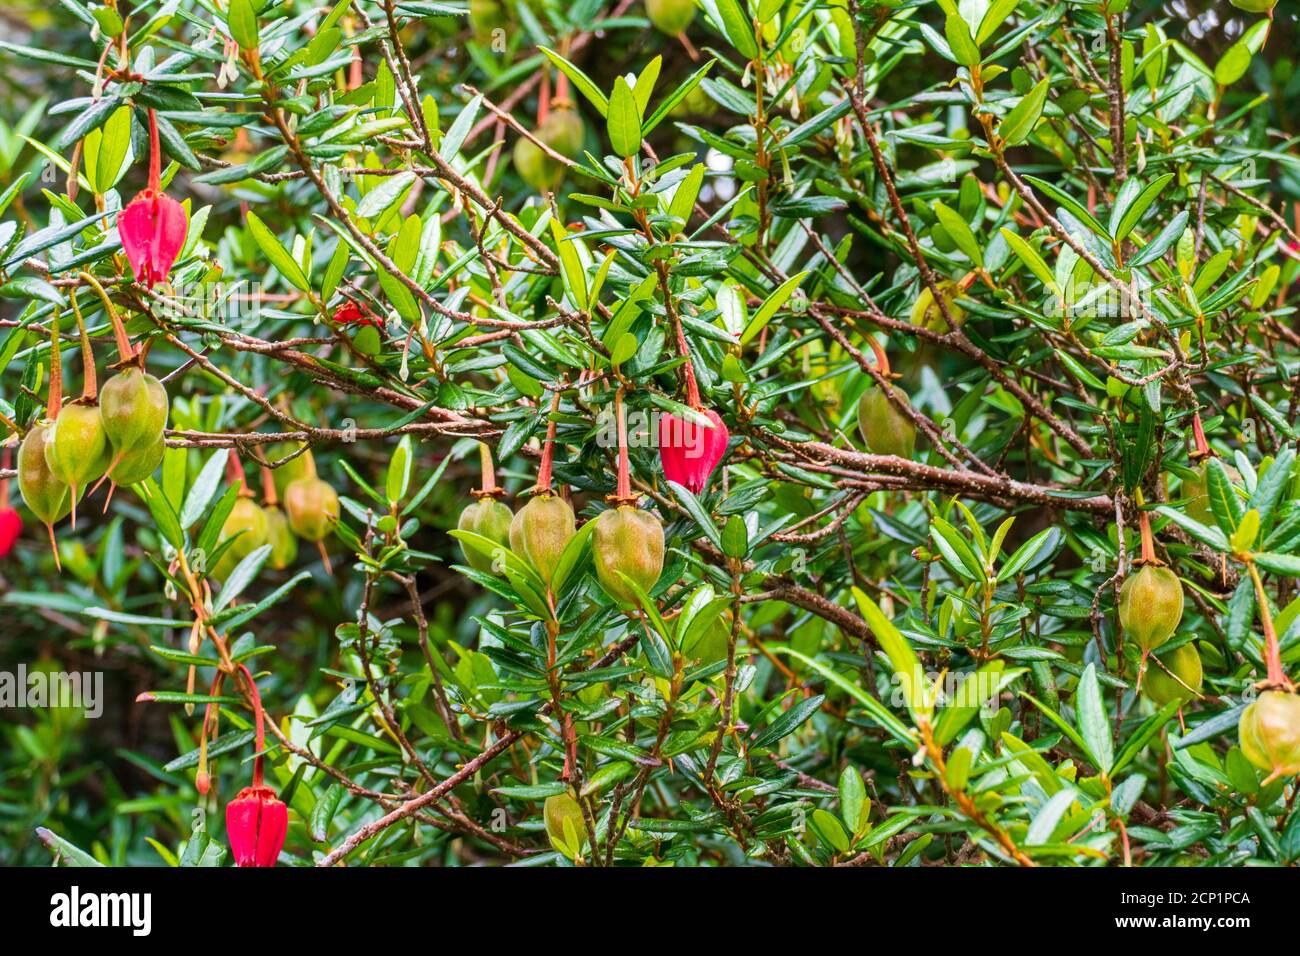 Laternenbaum, Chilean Lantern Tree, Crinodendron hookerianum mit kleinen roten Lampion Blüten Stock Photo